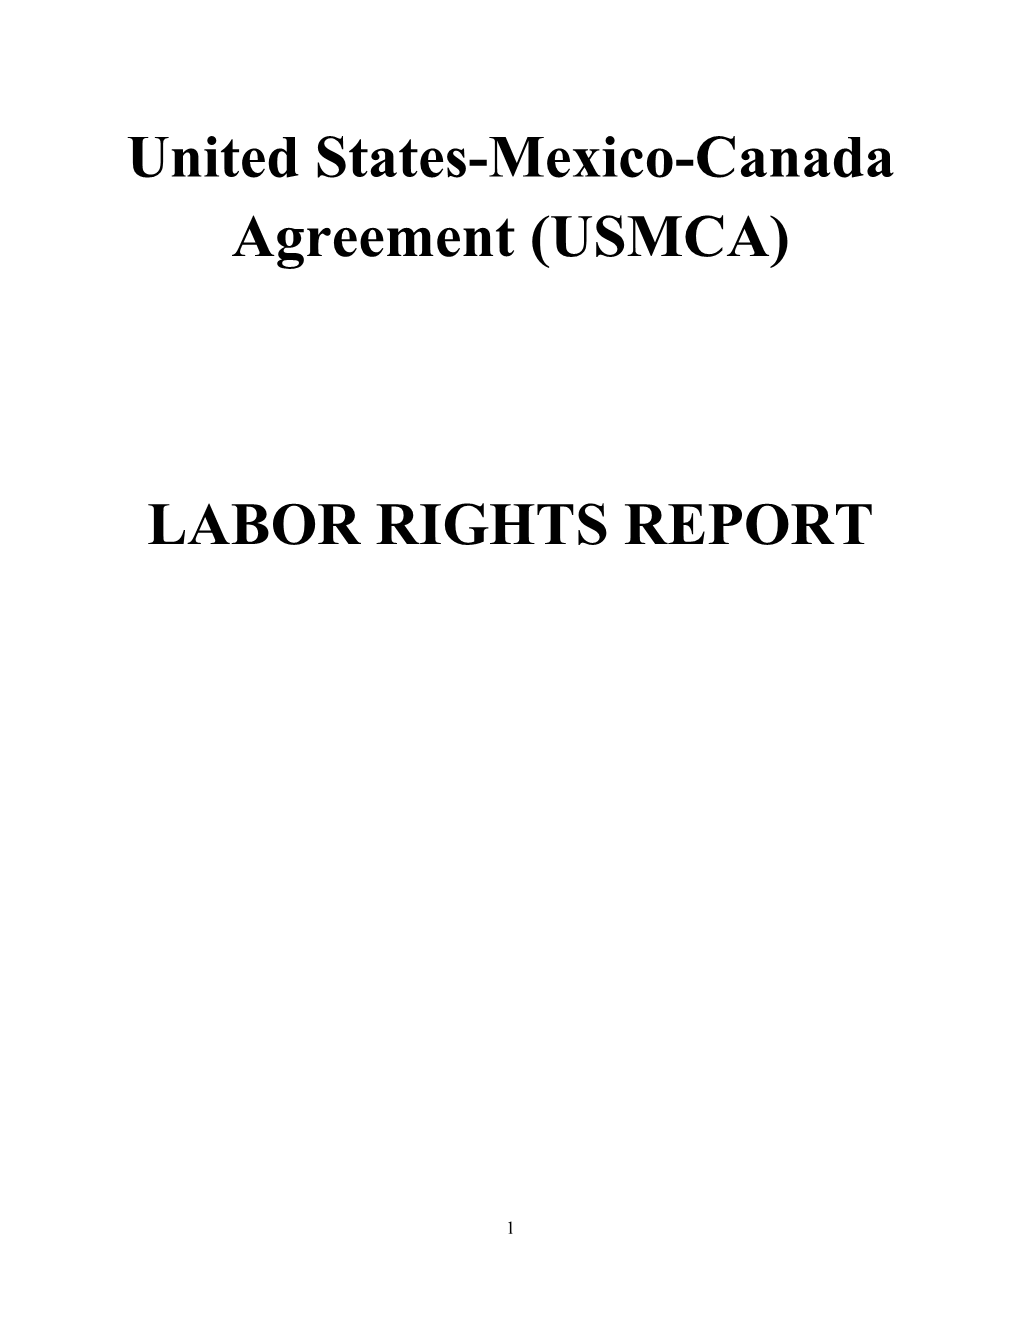 USMCA Labor Rights Report